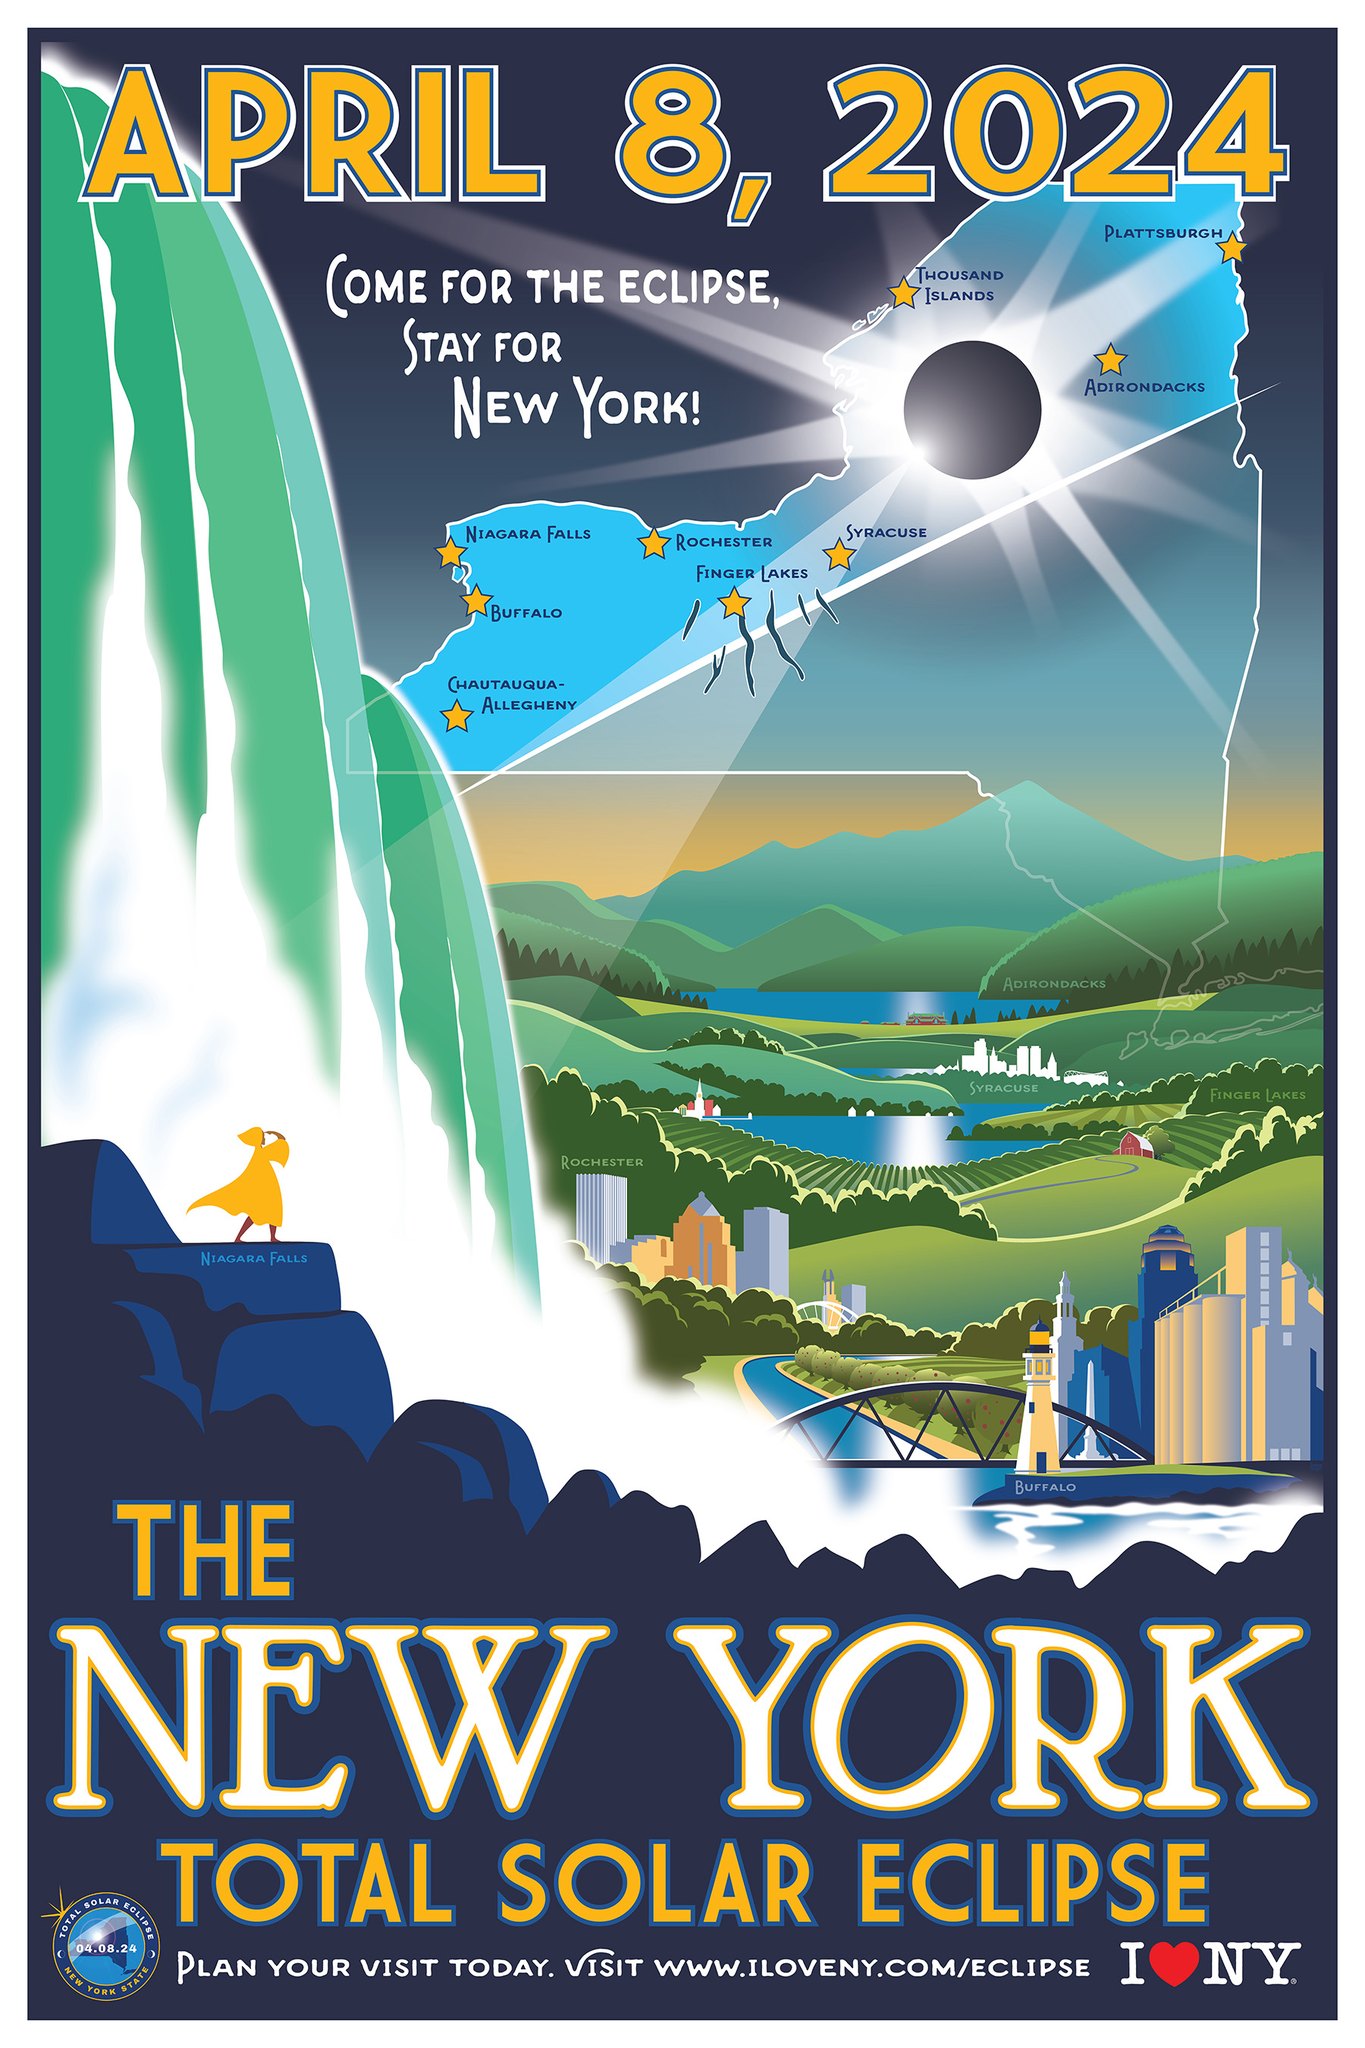 New York total solar eclipse April 8, 2024